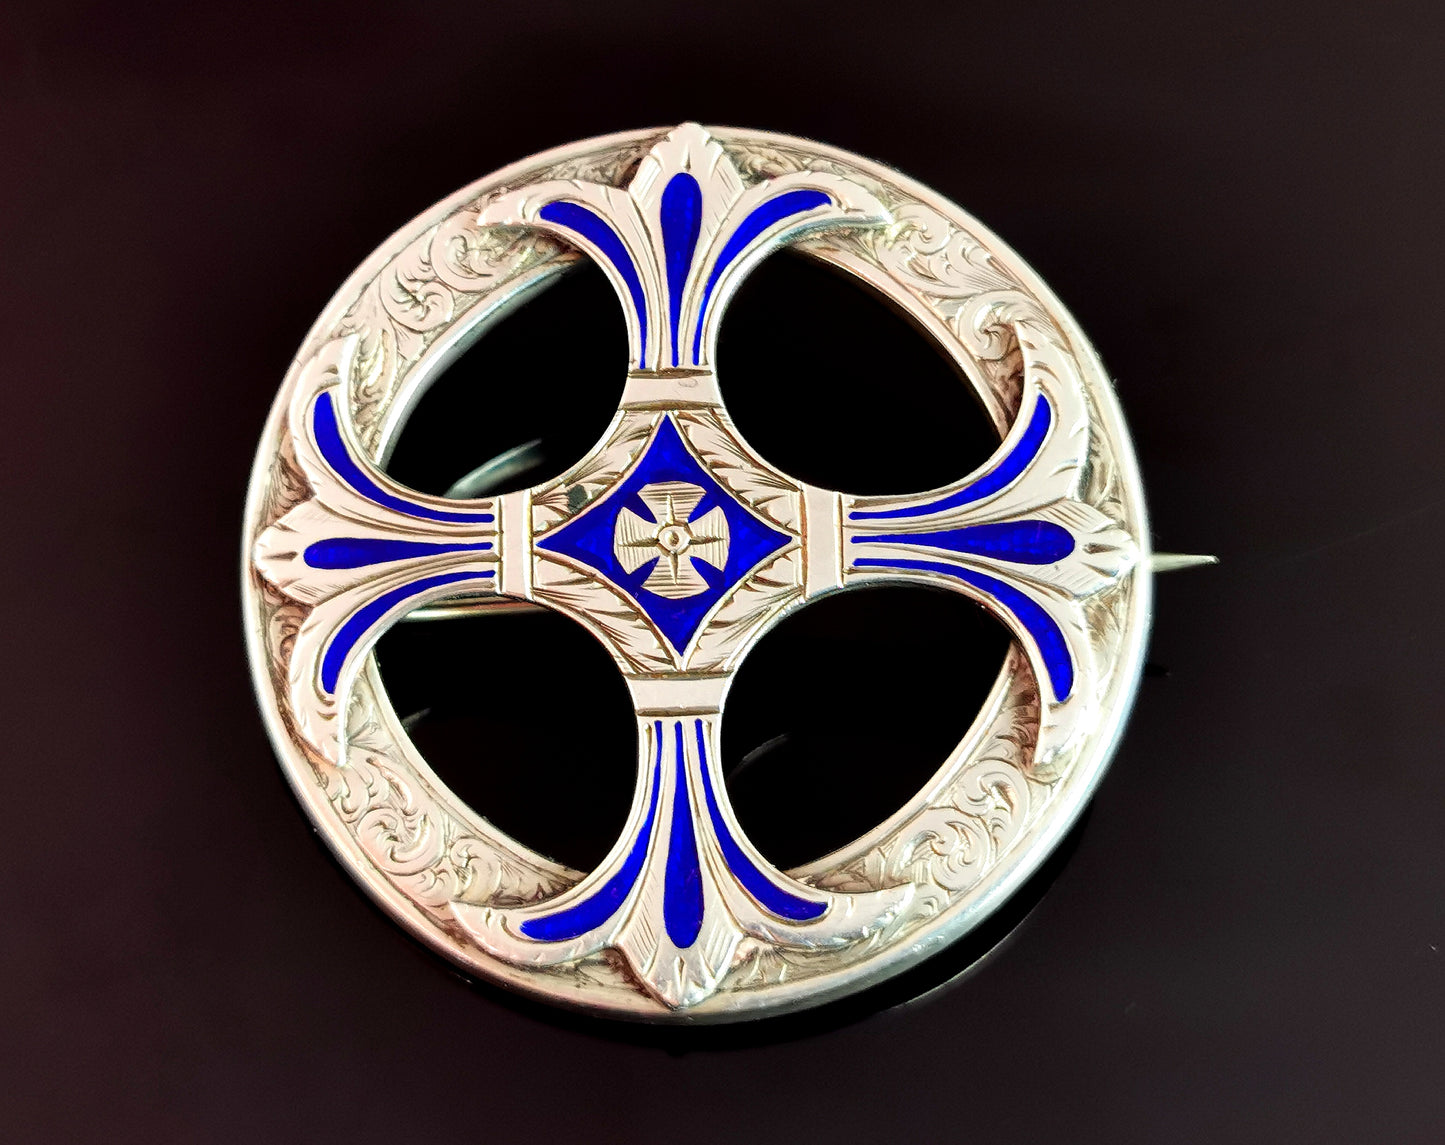 Antique Scottish silver and enamel brooch, Celtic Cross, Victorian